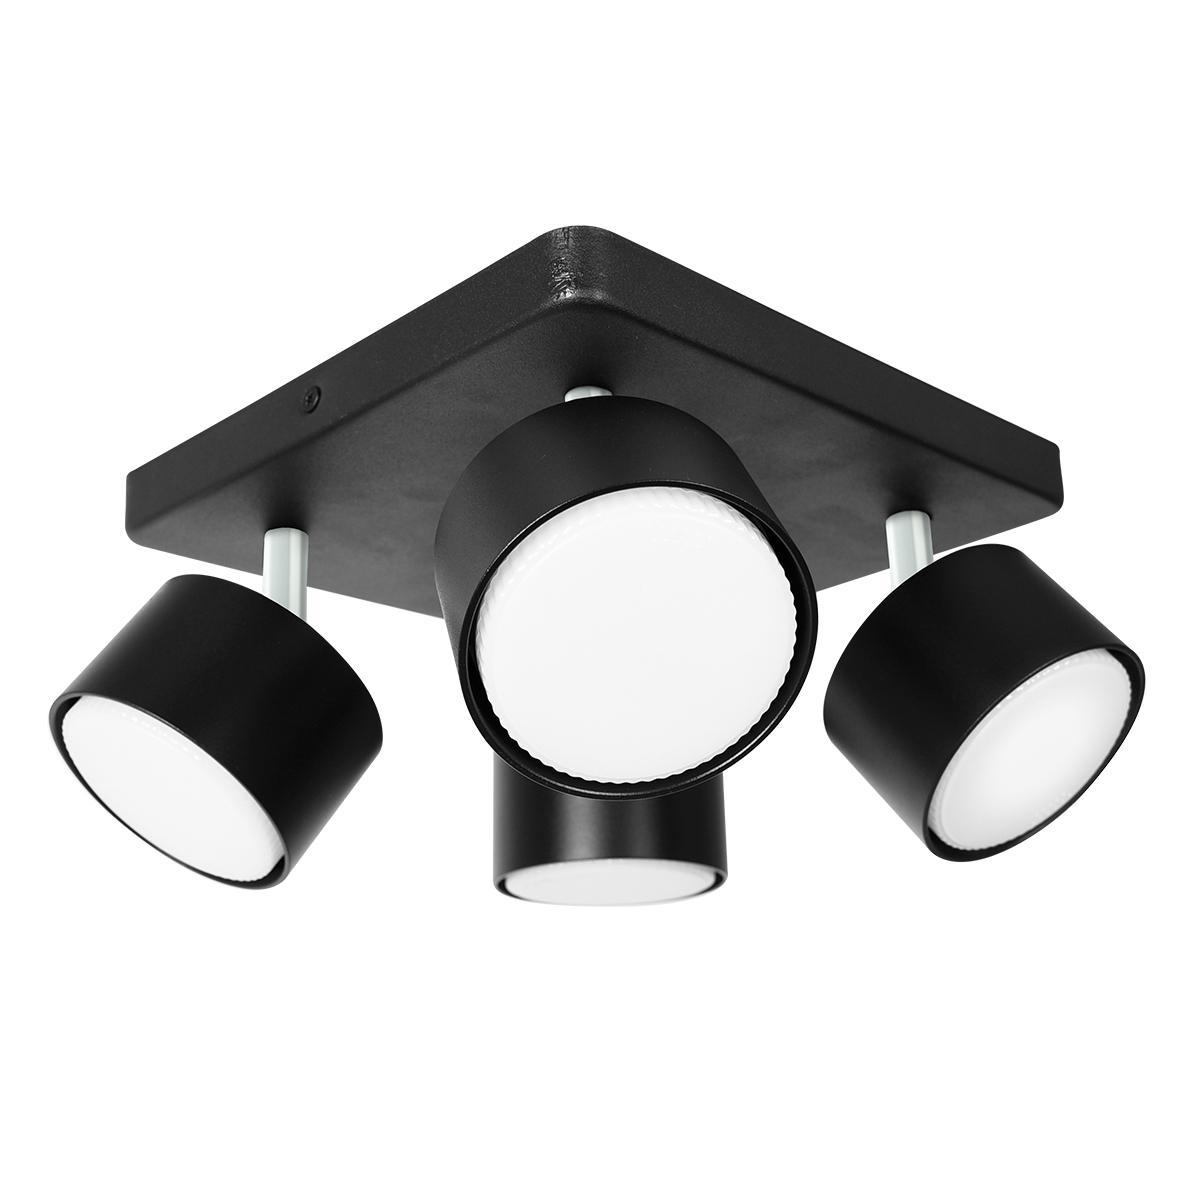 Lampa sufitowa punktowa LED Heckermann 8795318A Czarna 4x głowica 5 Full Screen